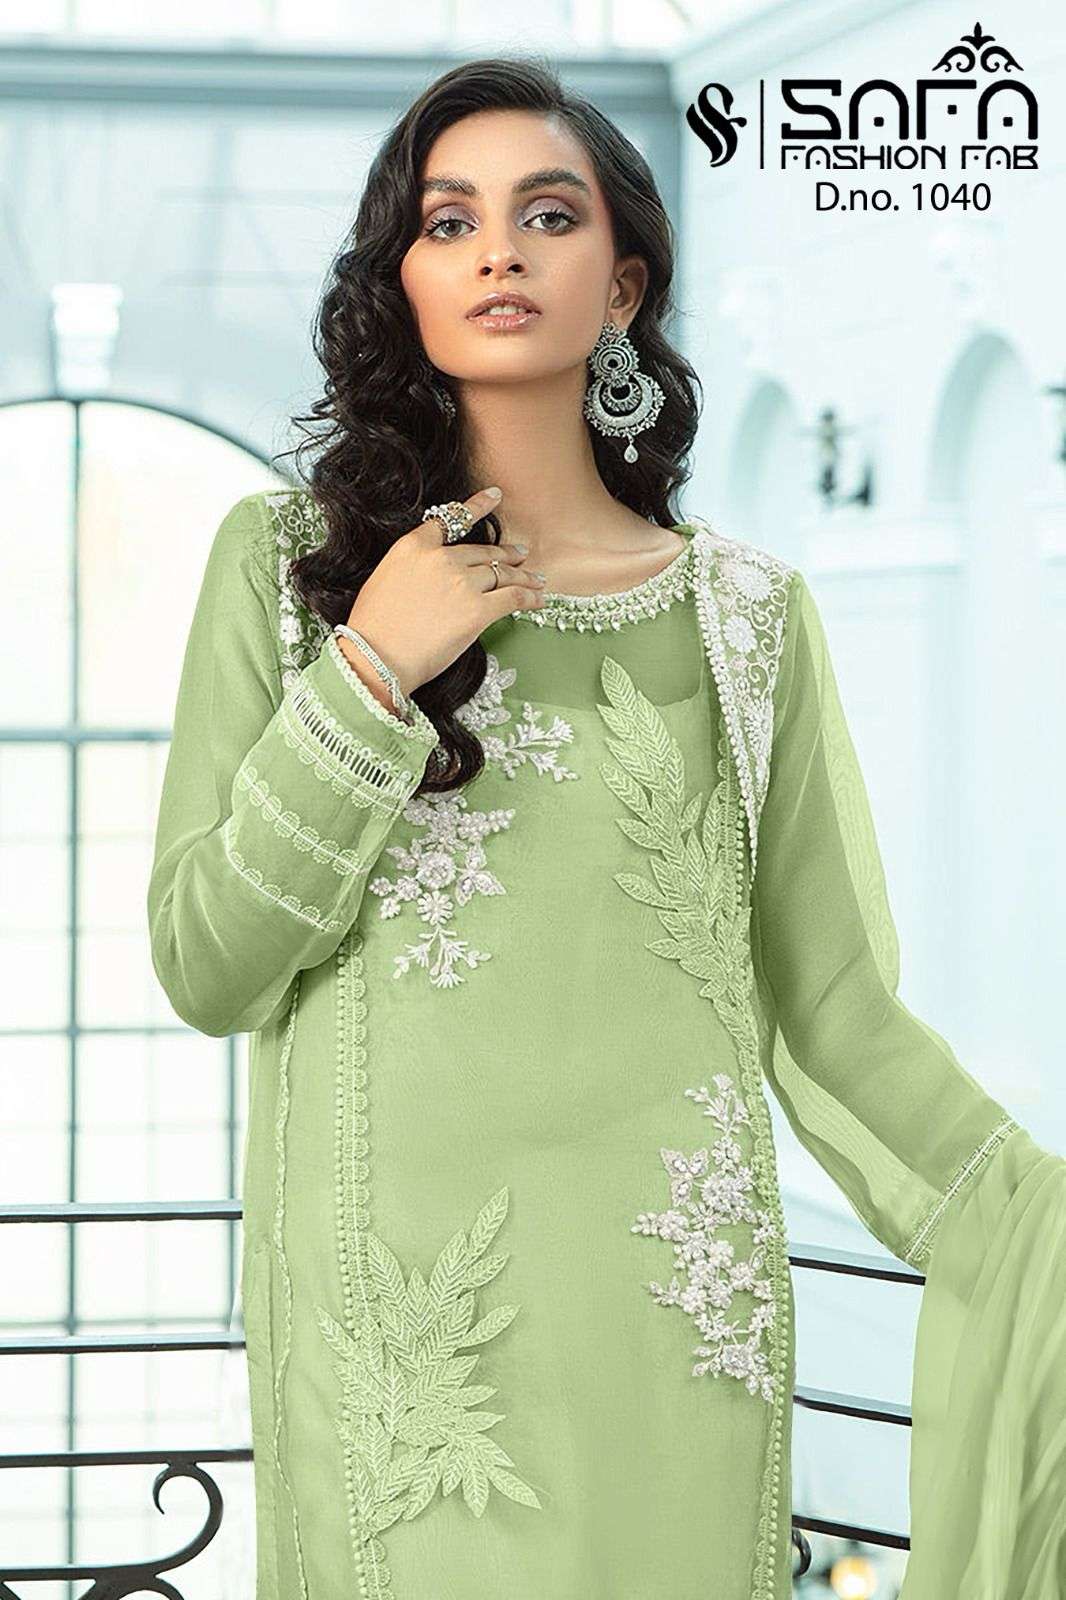 safa fashion hub 1140 colour fully stitched pakistani suit with embroidery work wholesaler surat gujarat